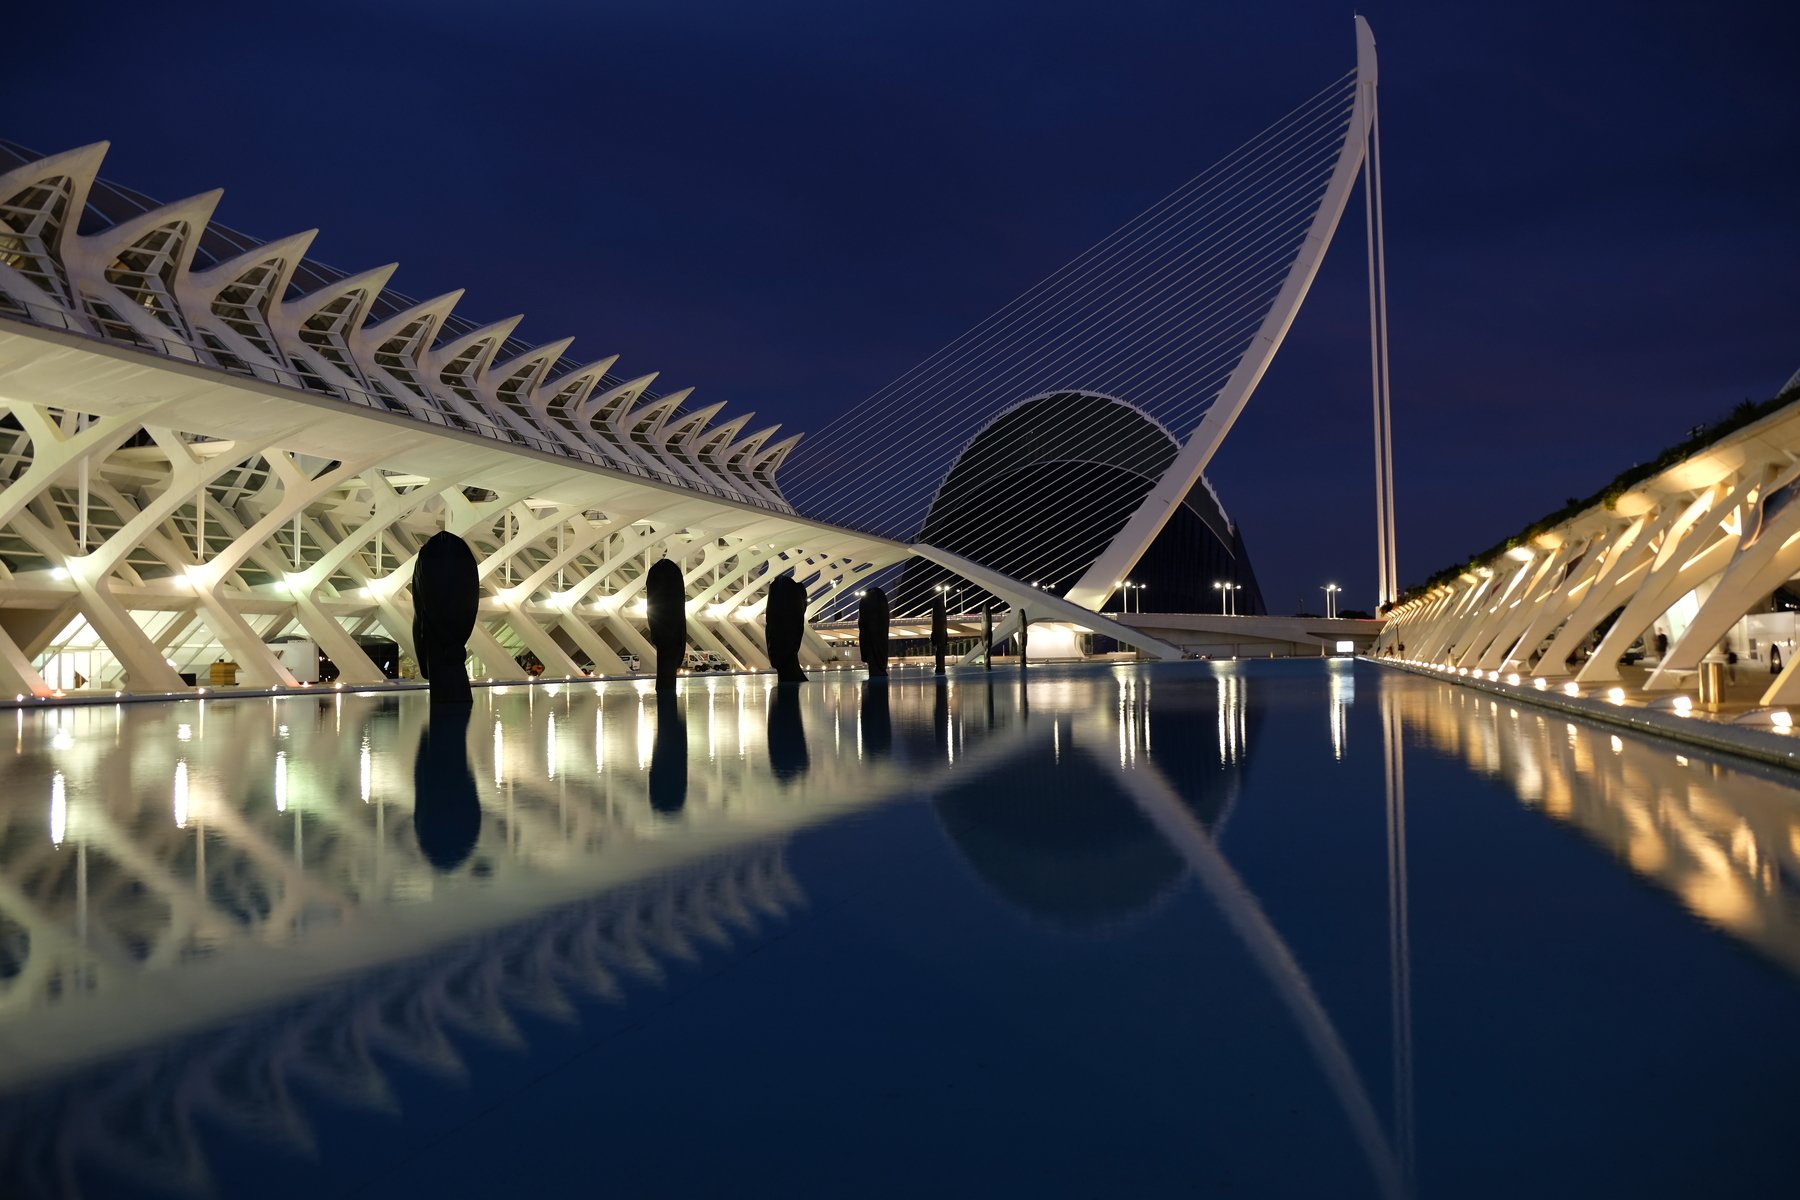 city/architecture, night, travel, Calatrava, architecture, moderne, lines, reflection, art, science, Spain, Valencia, nightlight, city, urban,, Svetlana Povarova Ree